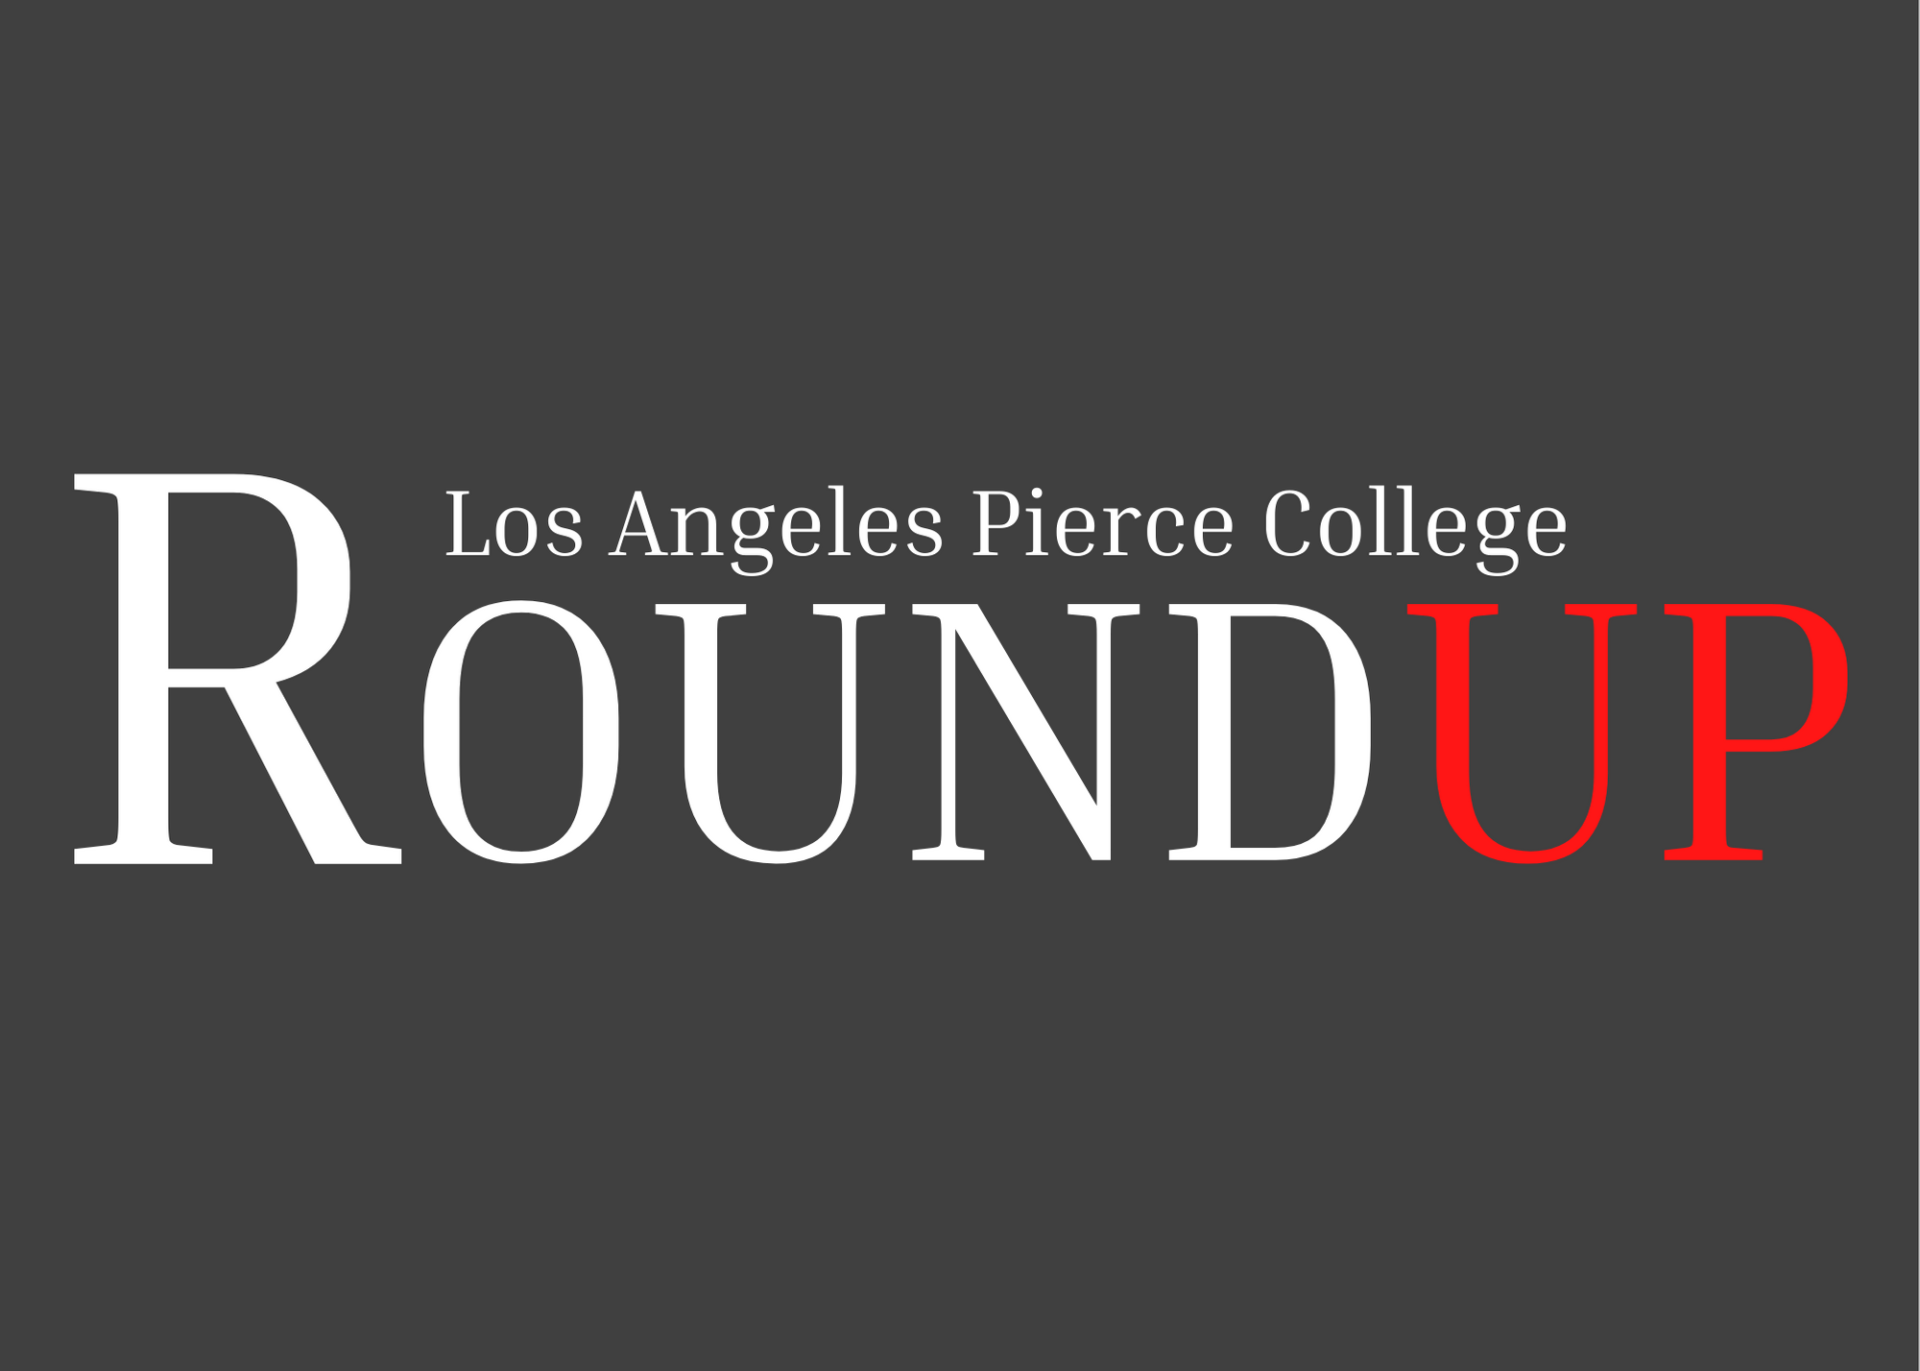 Changes to the Pierce College Website are Underway